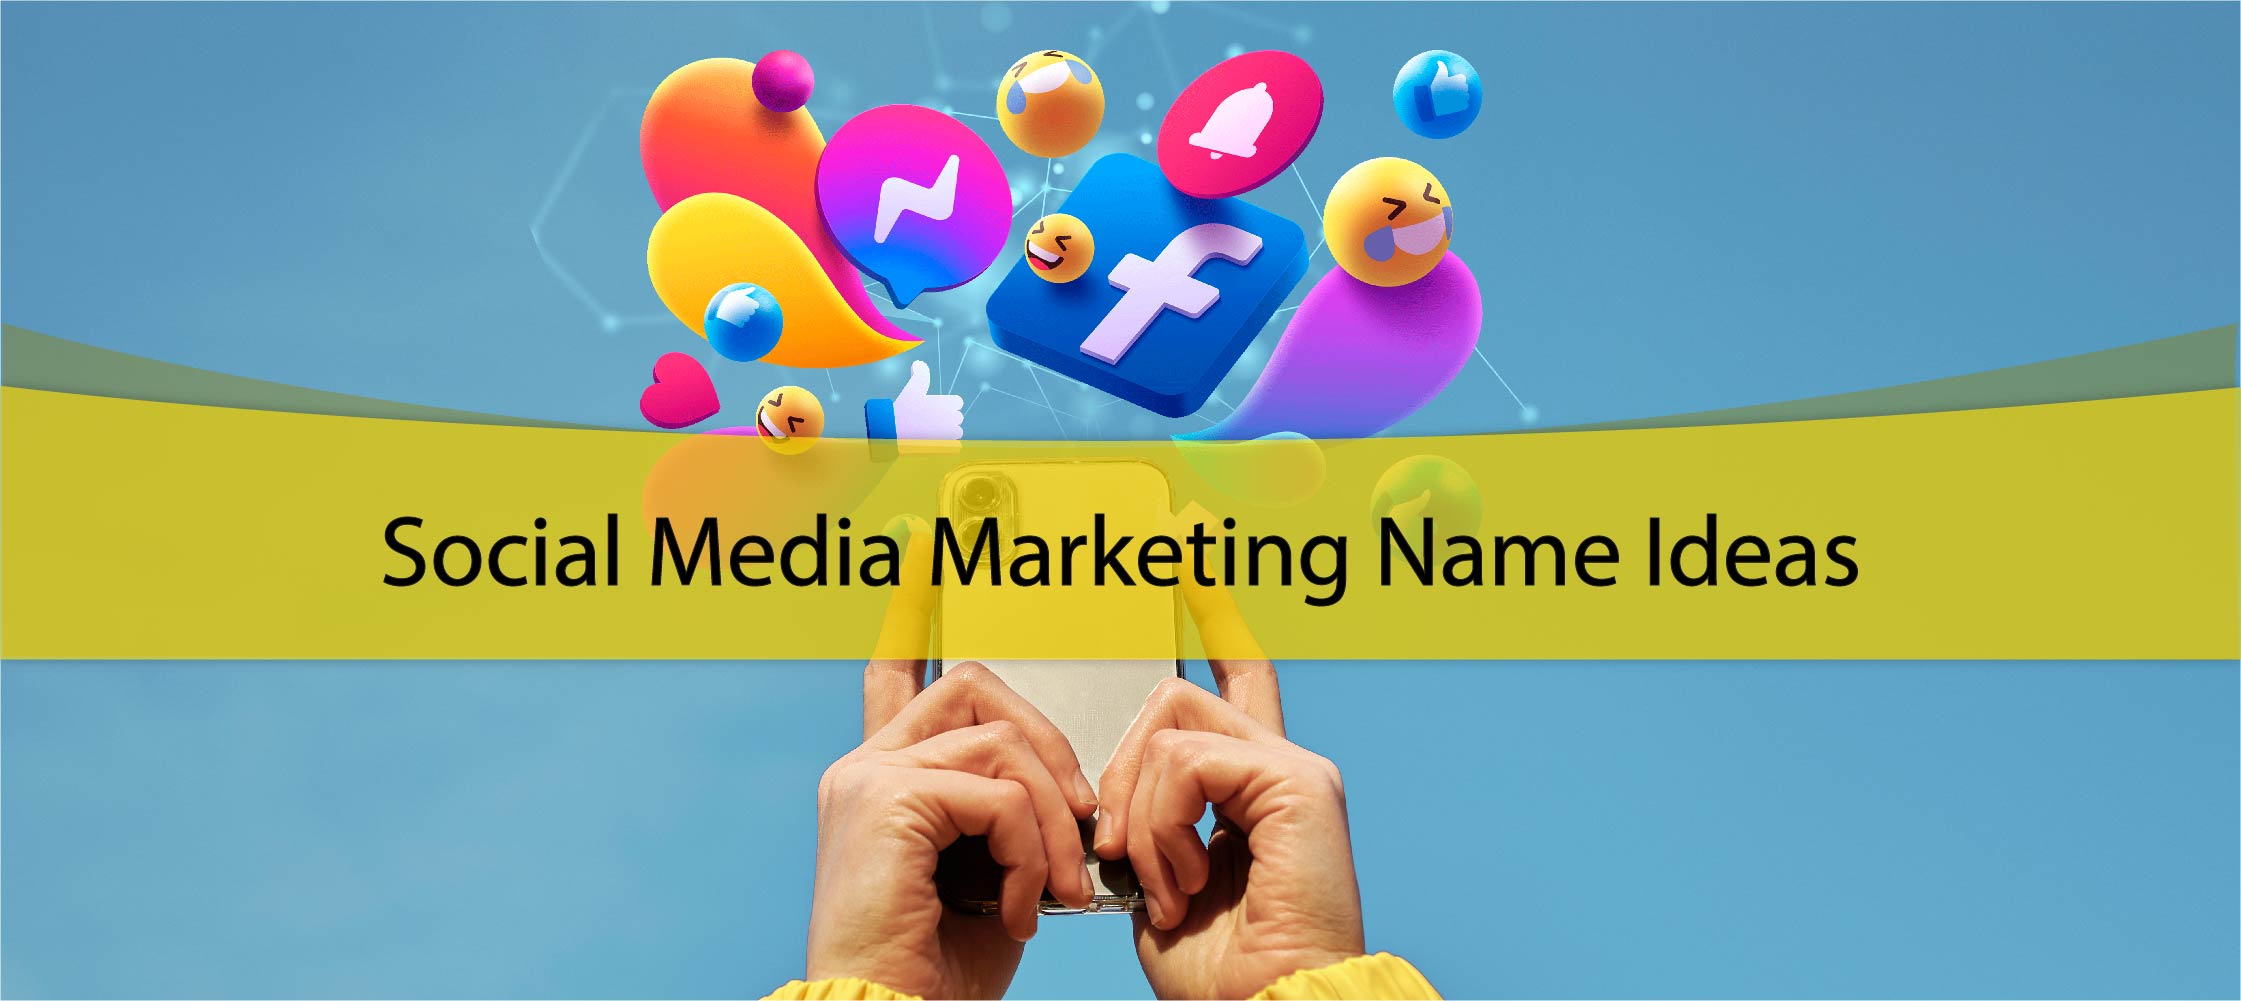 Social Media Marketing Name Ideas